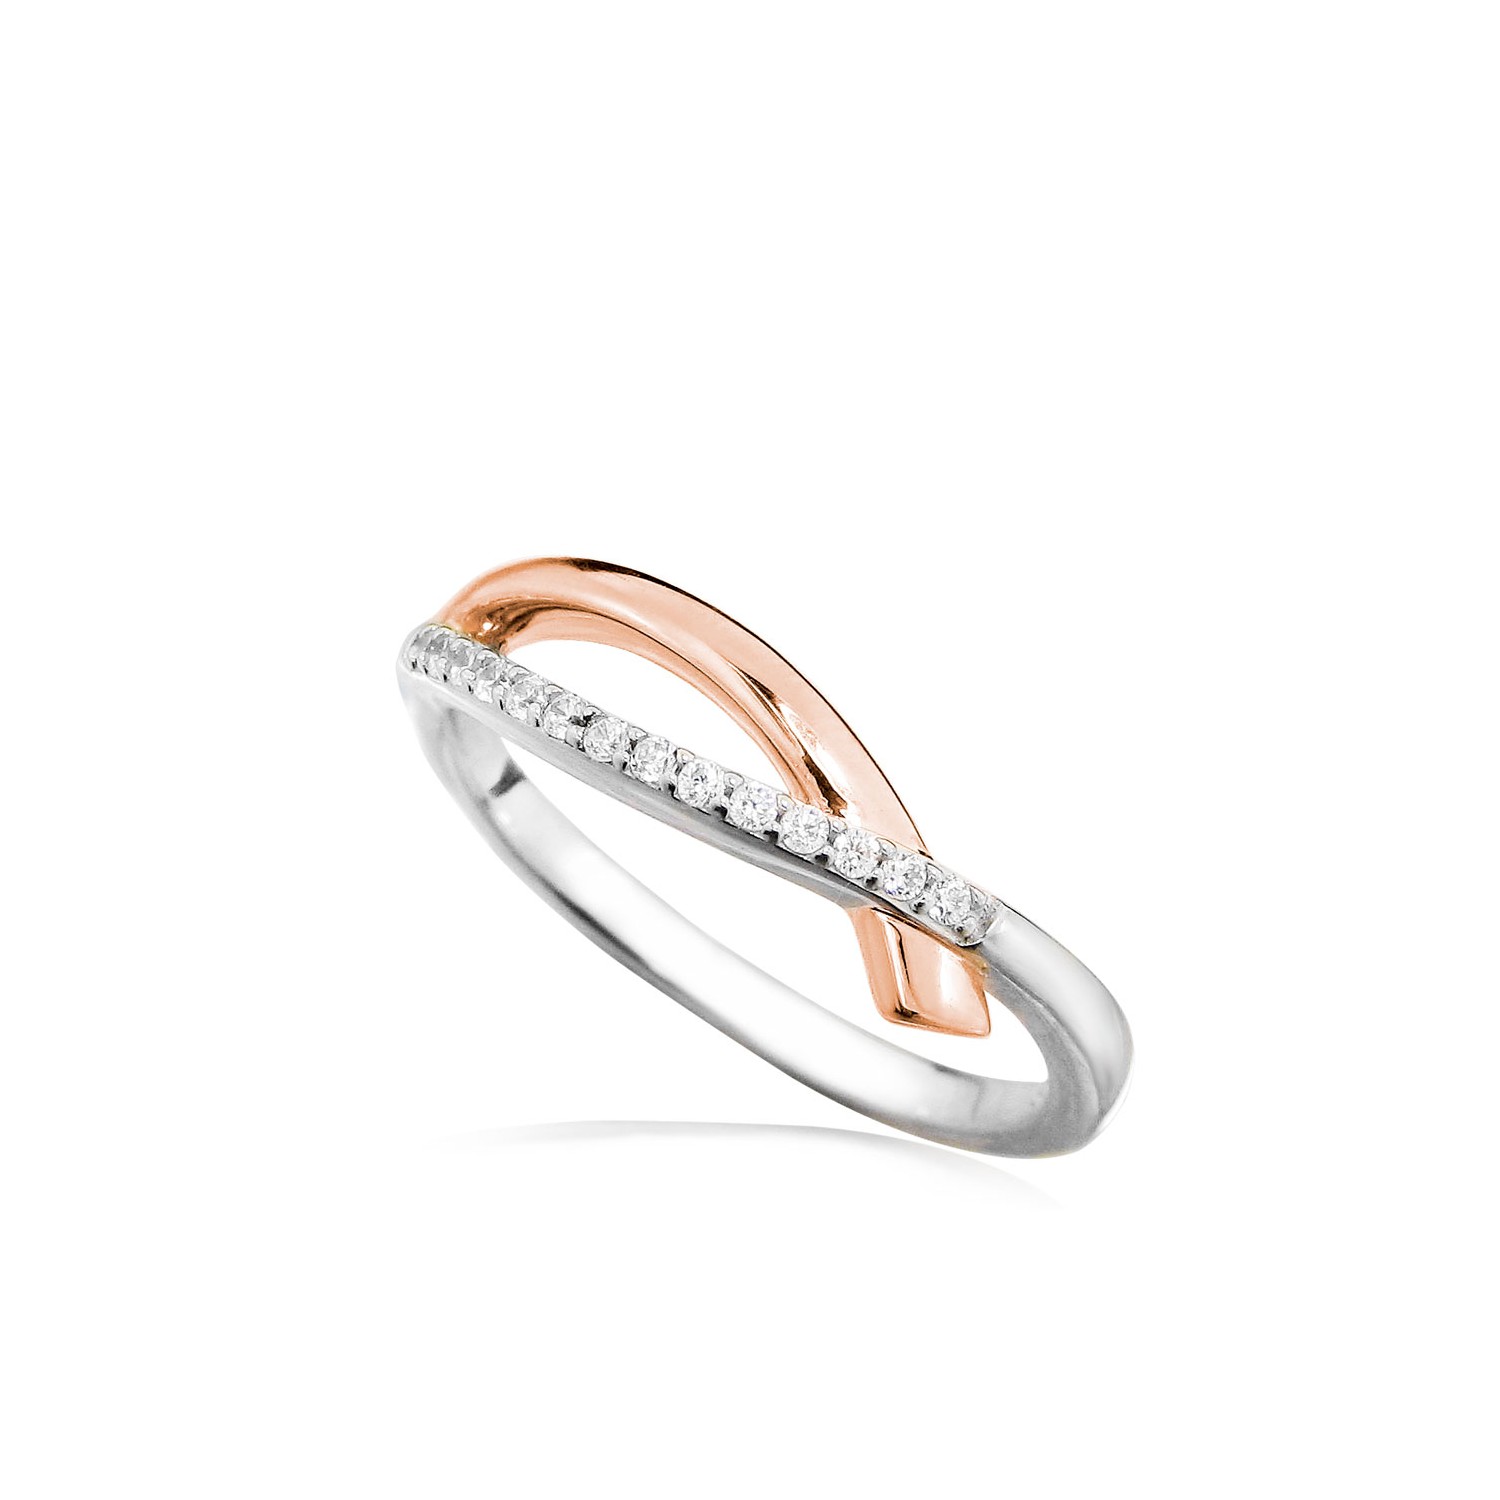 MOISS Moiss stříbrný prsten ADÉLA BICOLOR ROSE R0000917 Velikost 52 mm R0000917